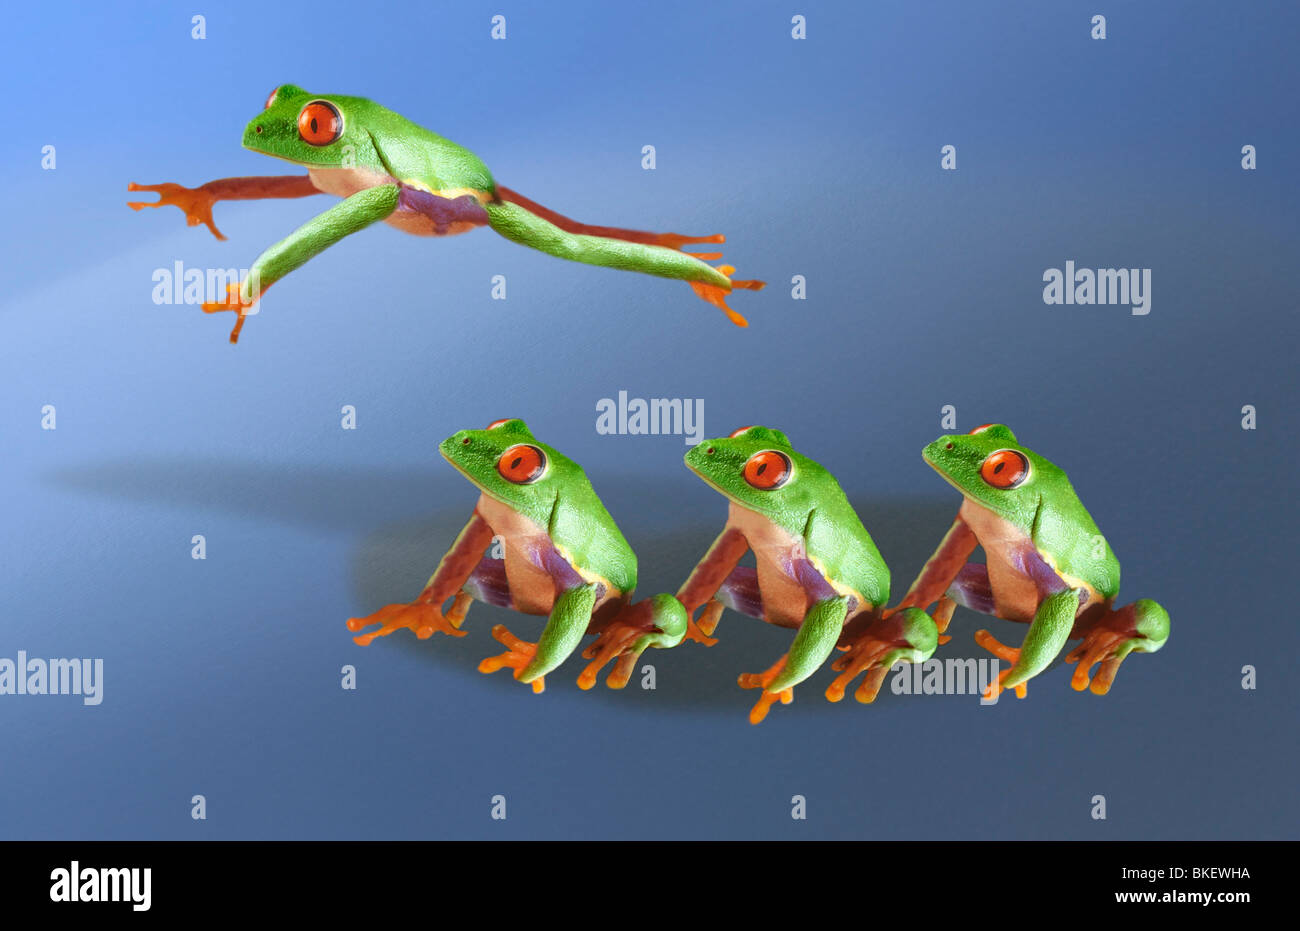 leap frog cartoon